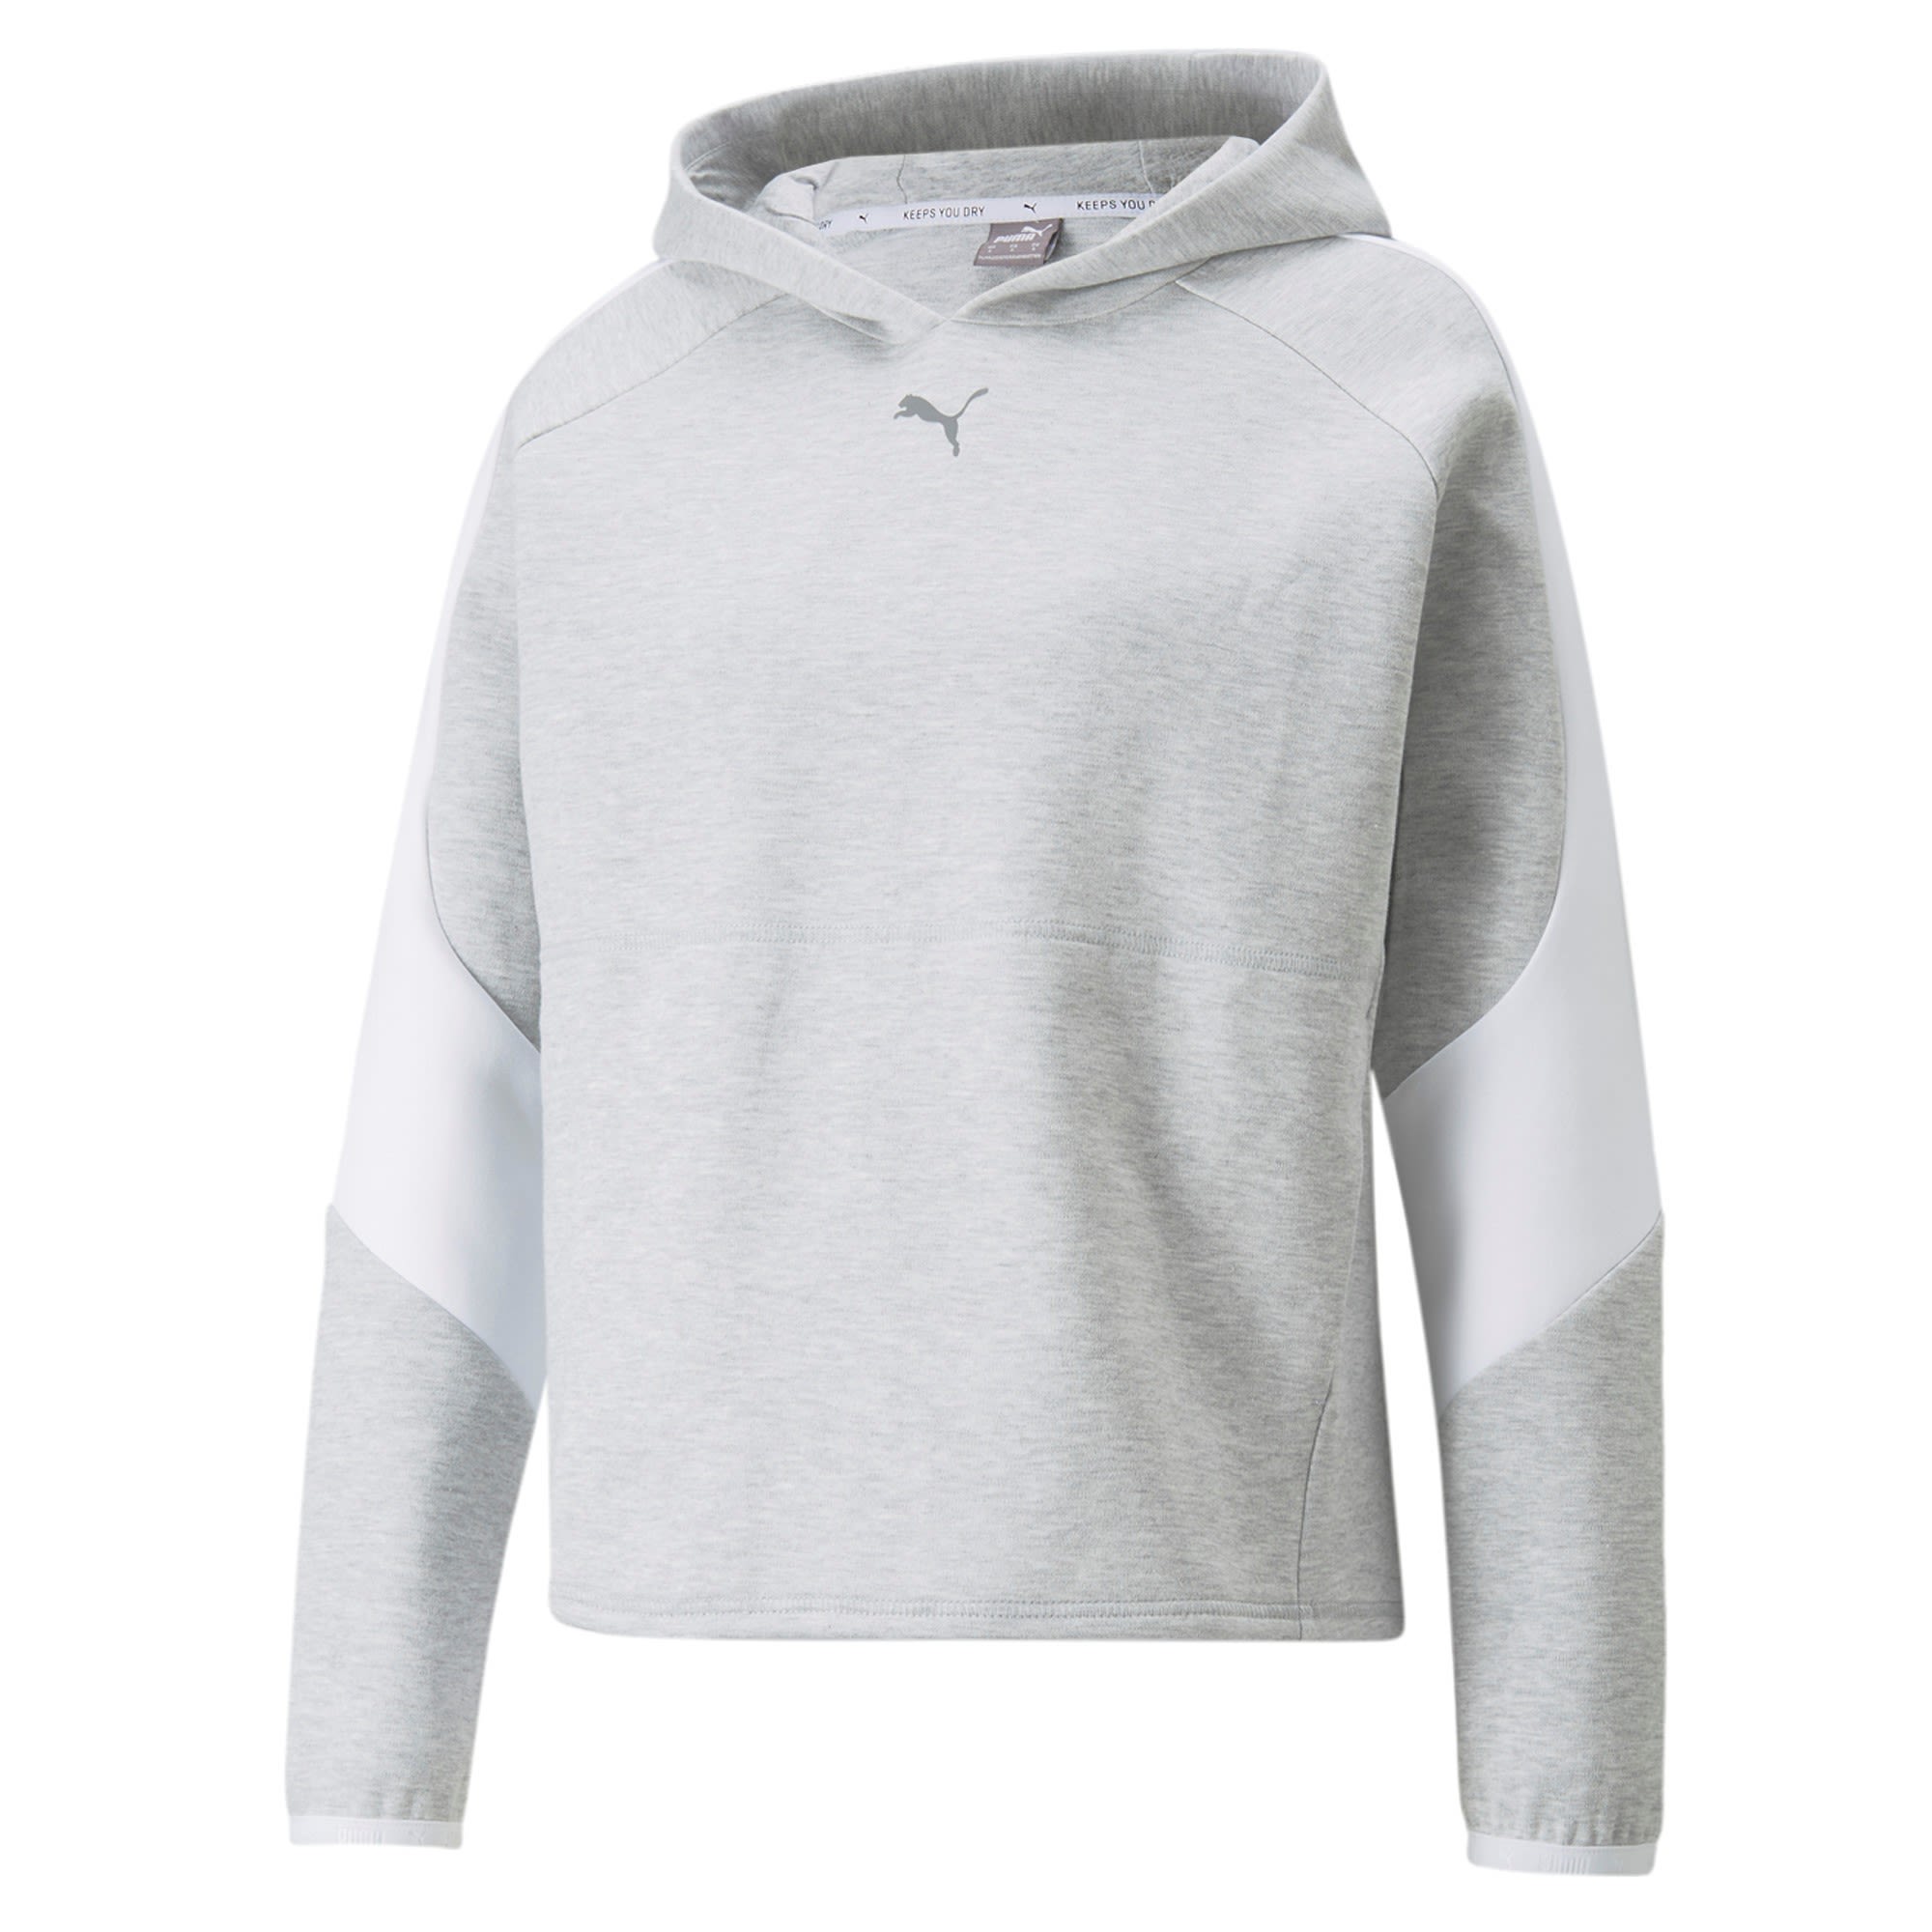 Puma Evostripe Hoodie Grau- Female Sweaters und Hoodies- Grsse M - Farbe Light Gray Heather